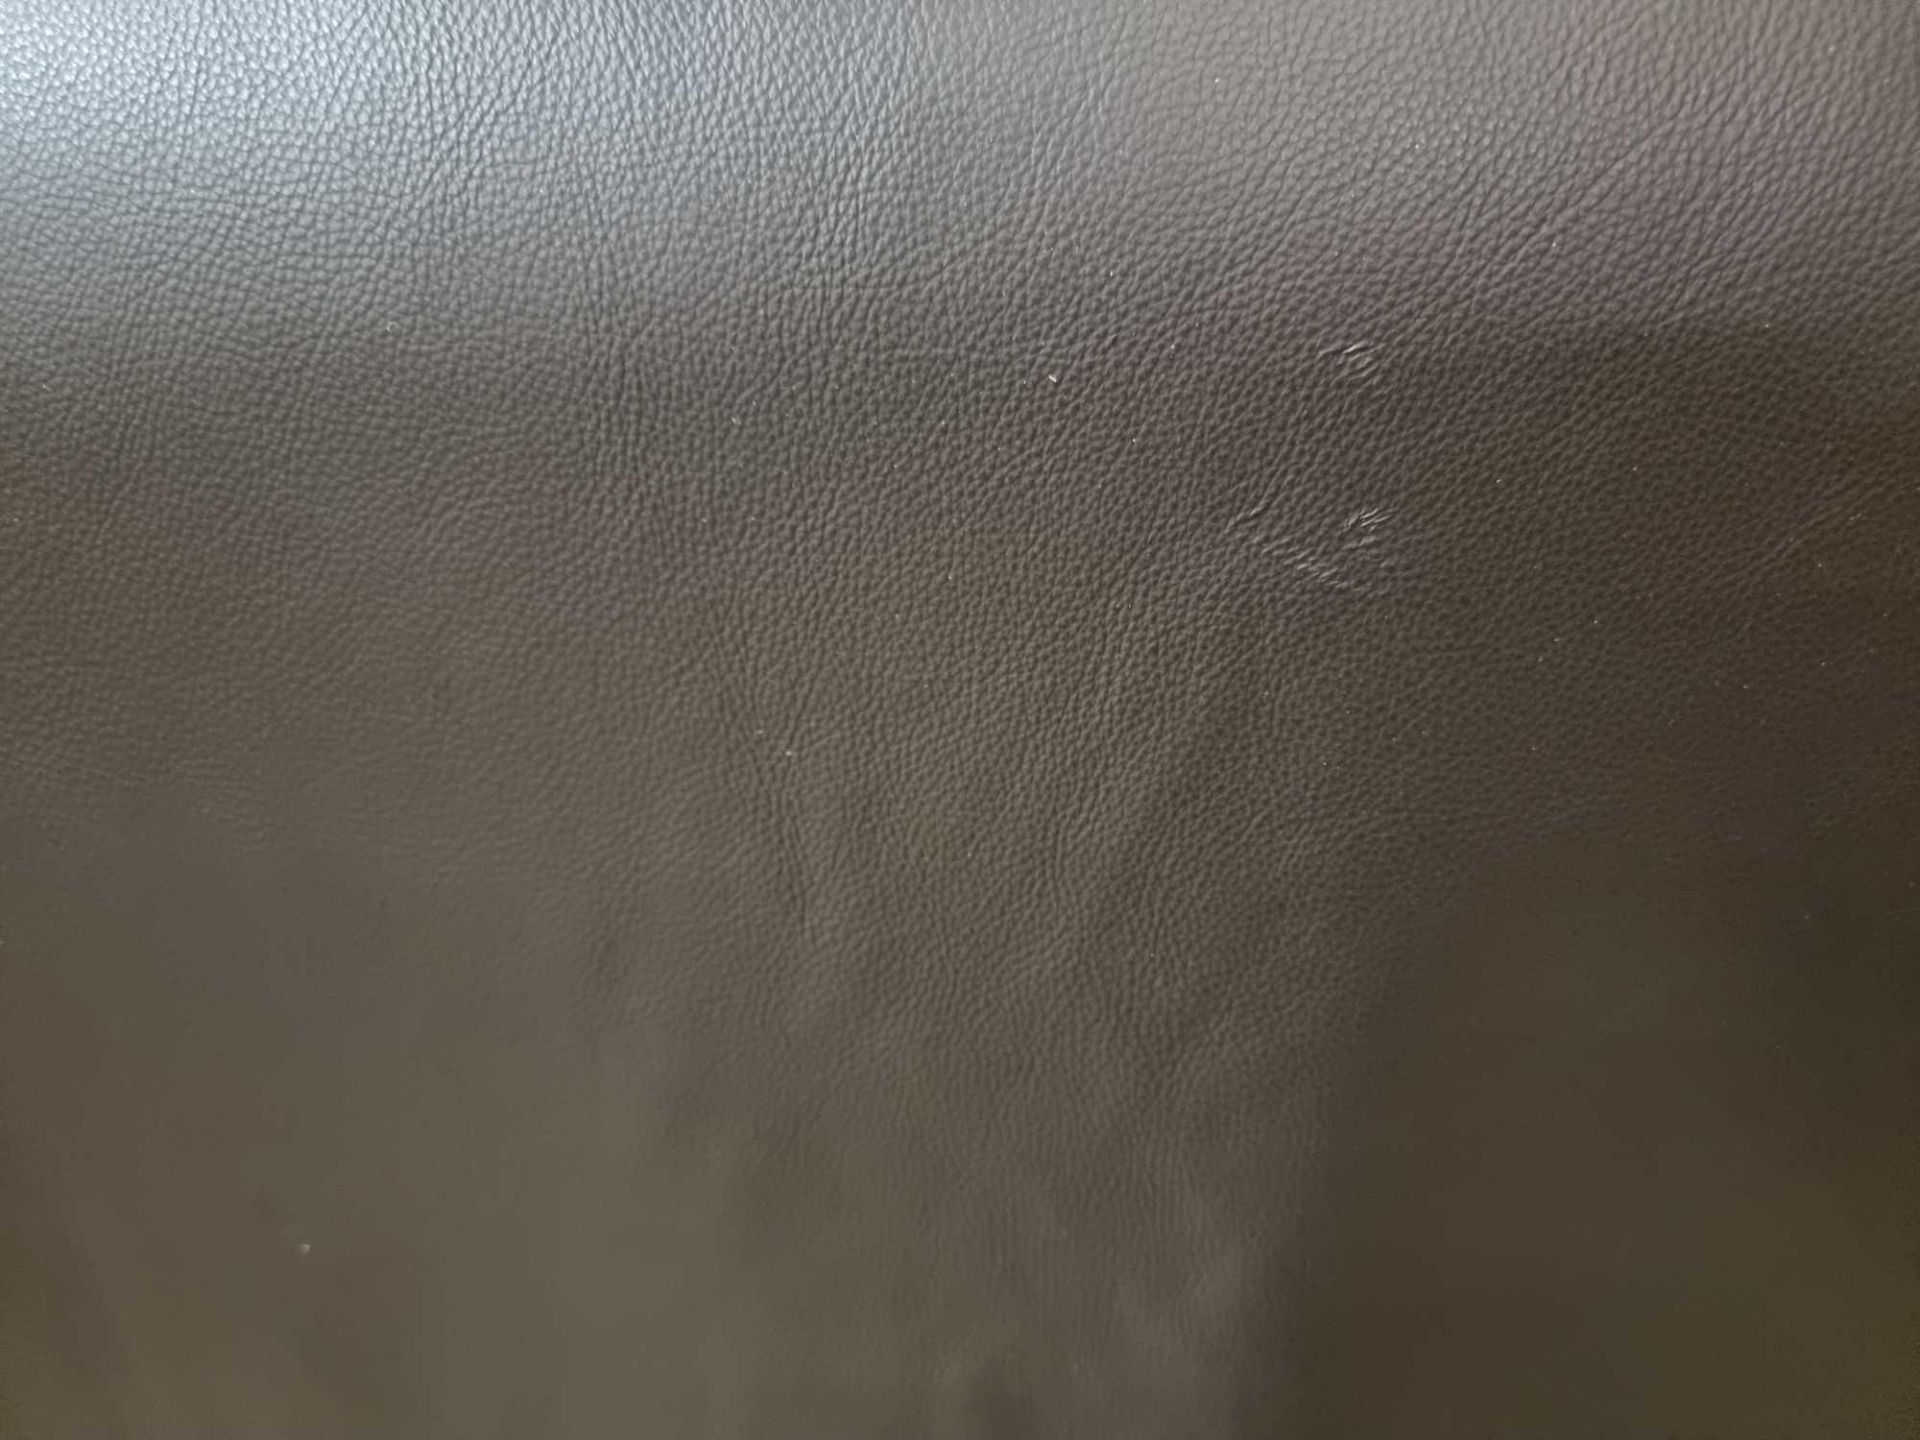 Yarwood Hammersmith Chocolate Leather Hide approximately 5M2 2 5 x 2cm ( Hide No,93) - Bild 2 aus 3